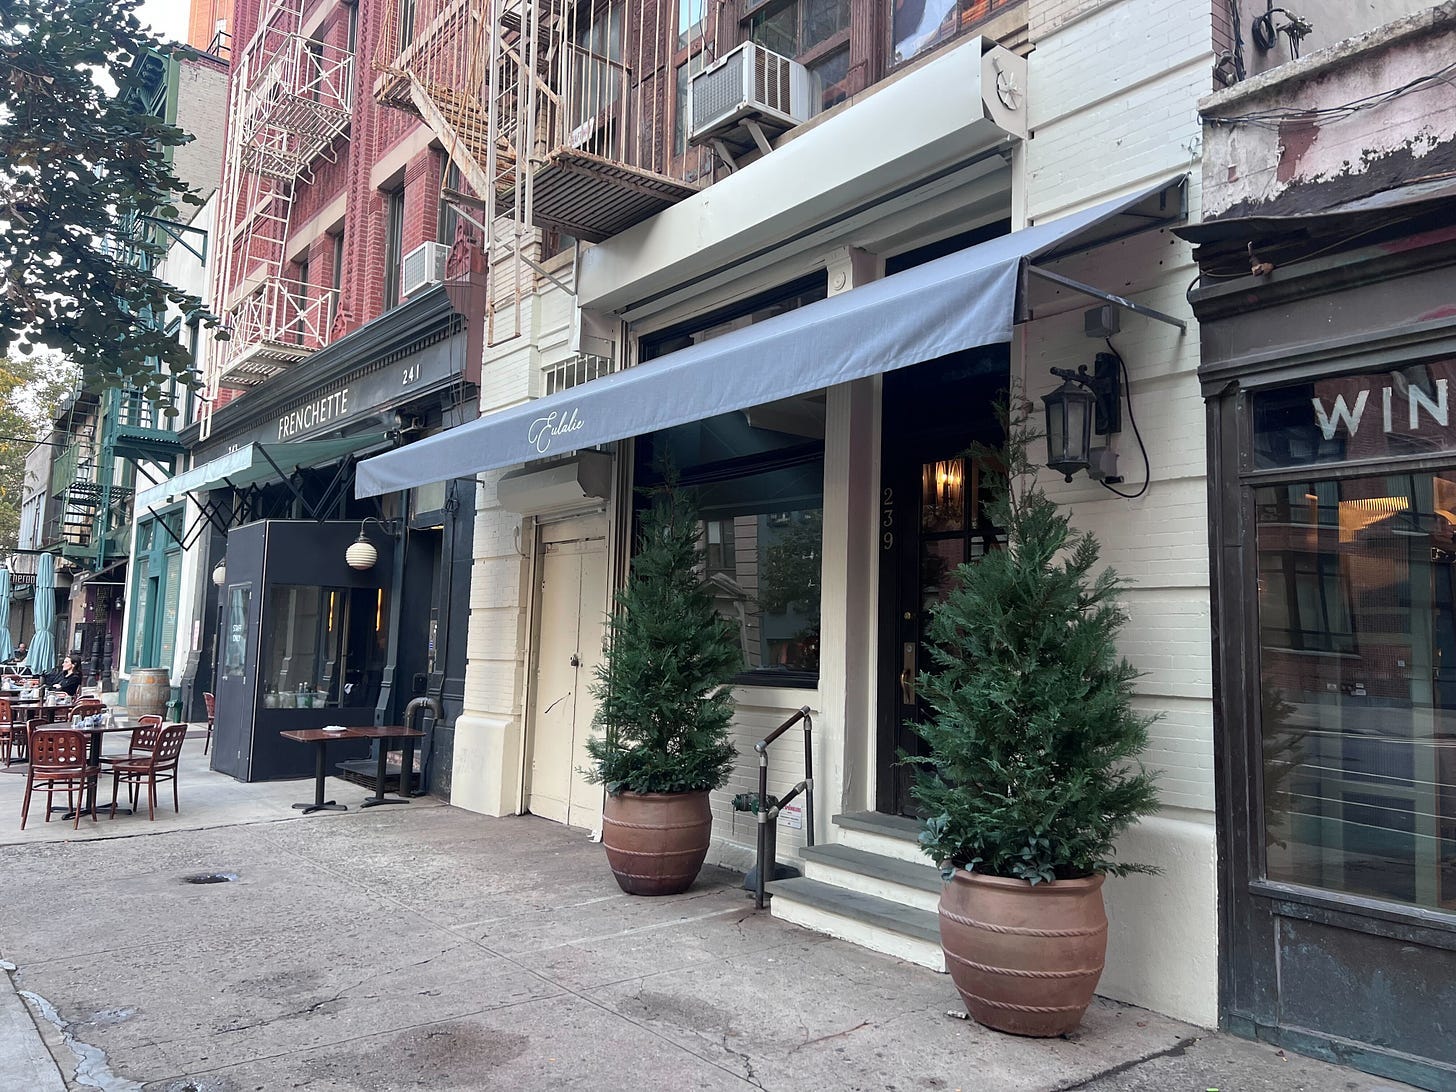 Bergdorf Goodman Men's Bar Restaurant - New York, NY